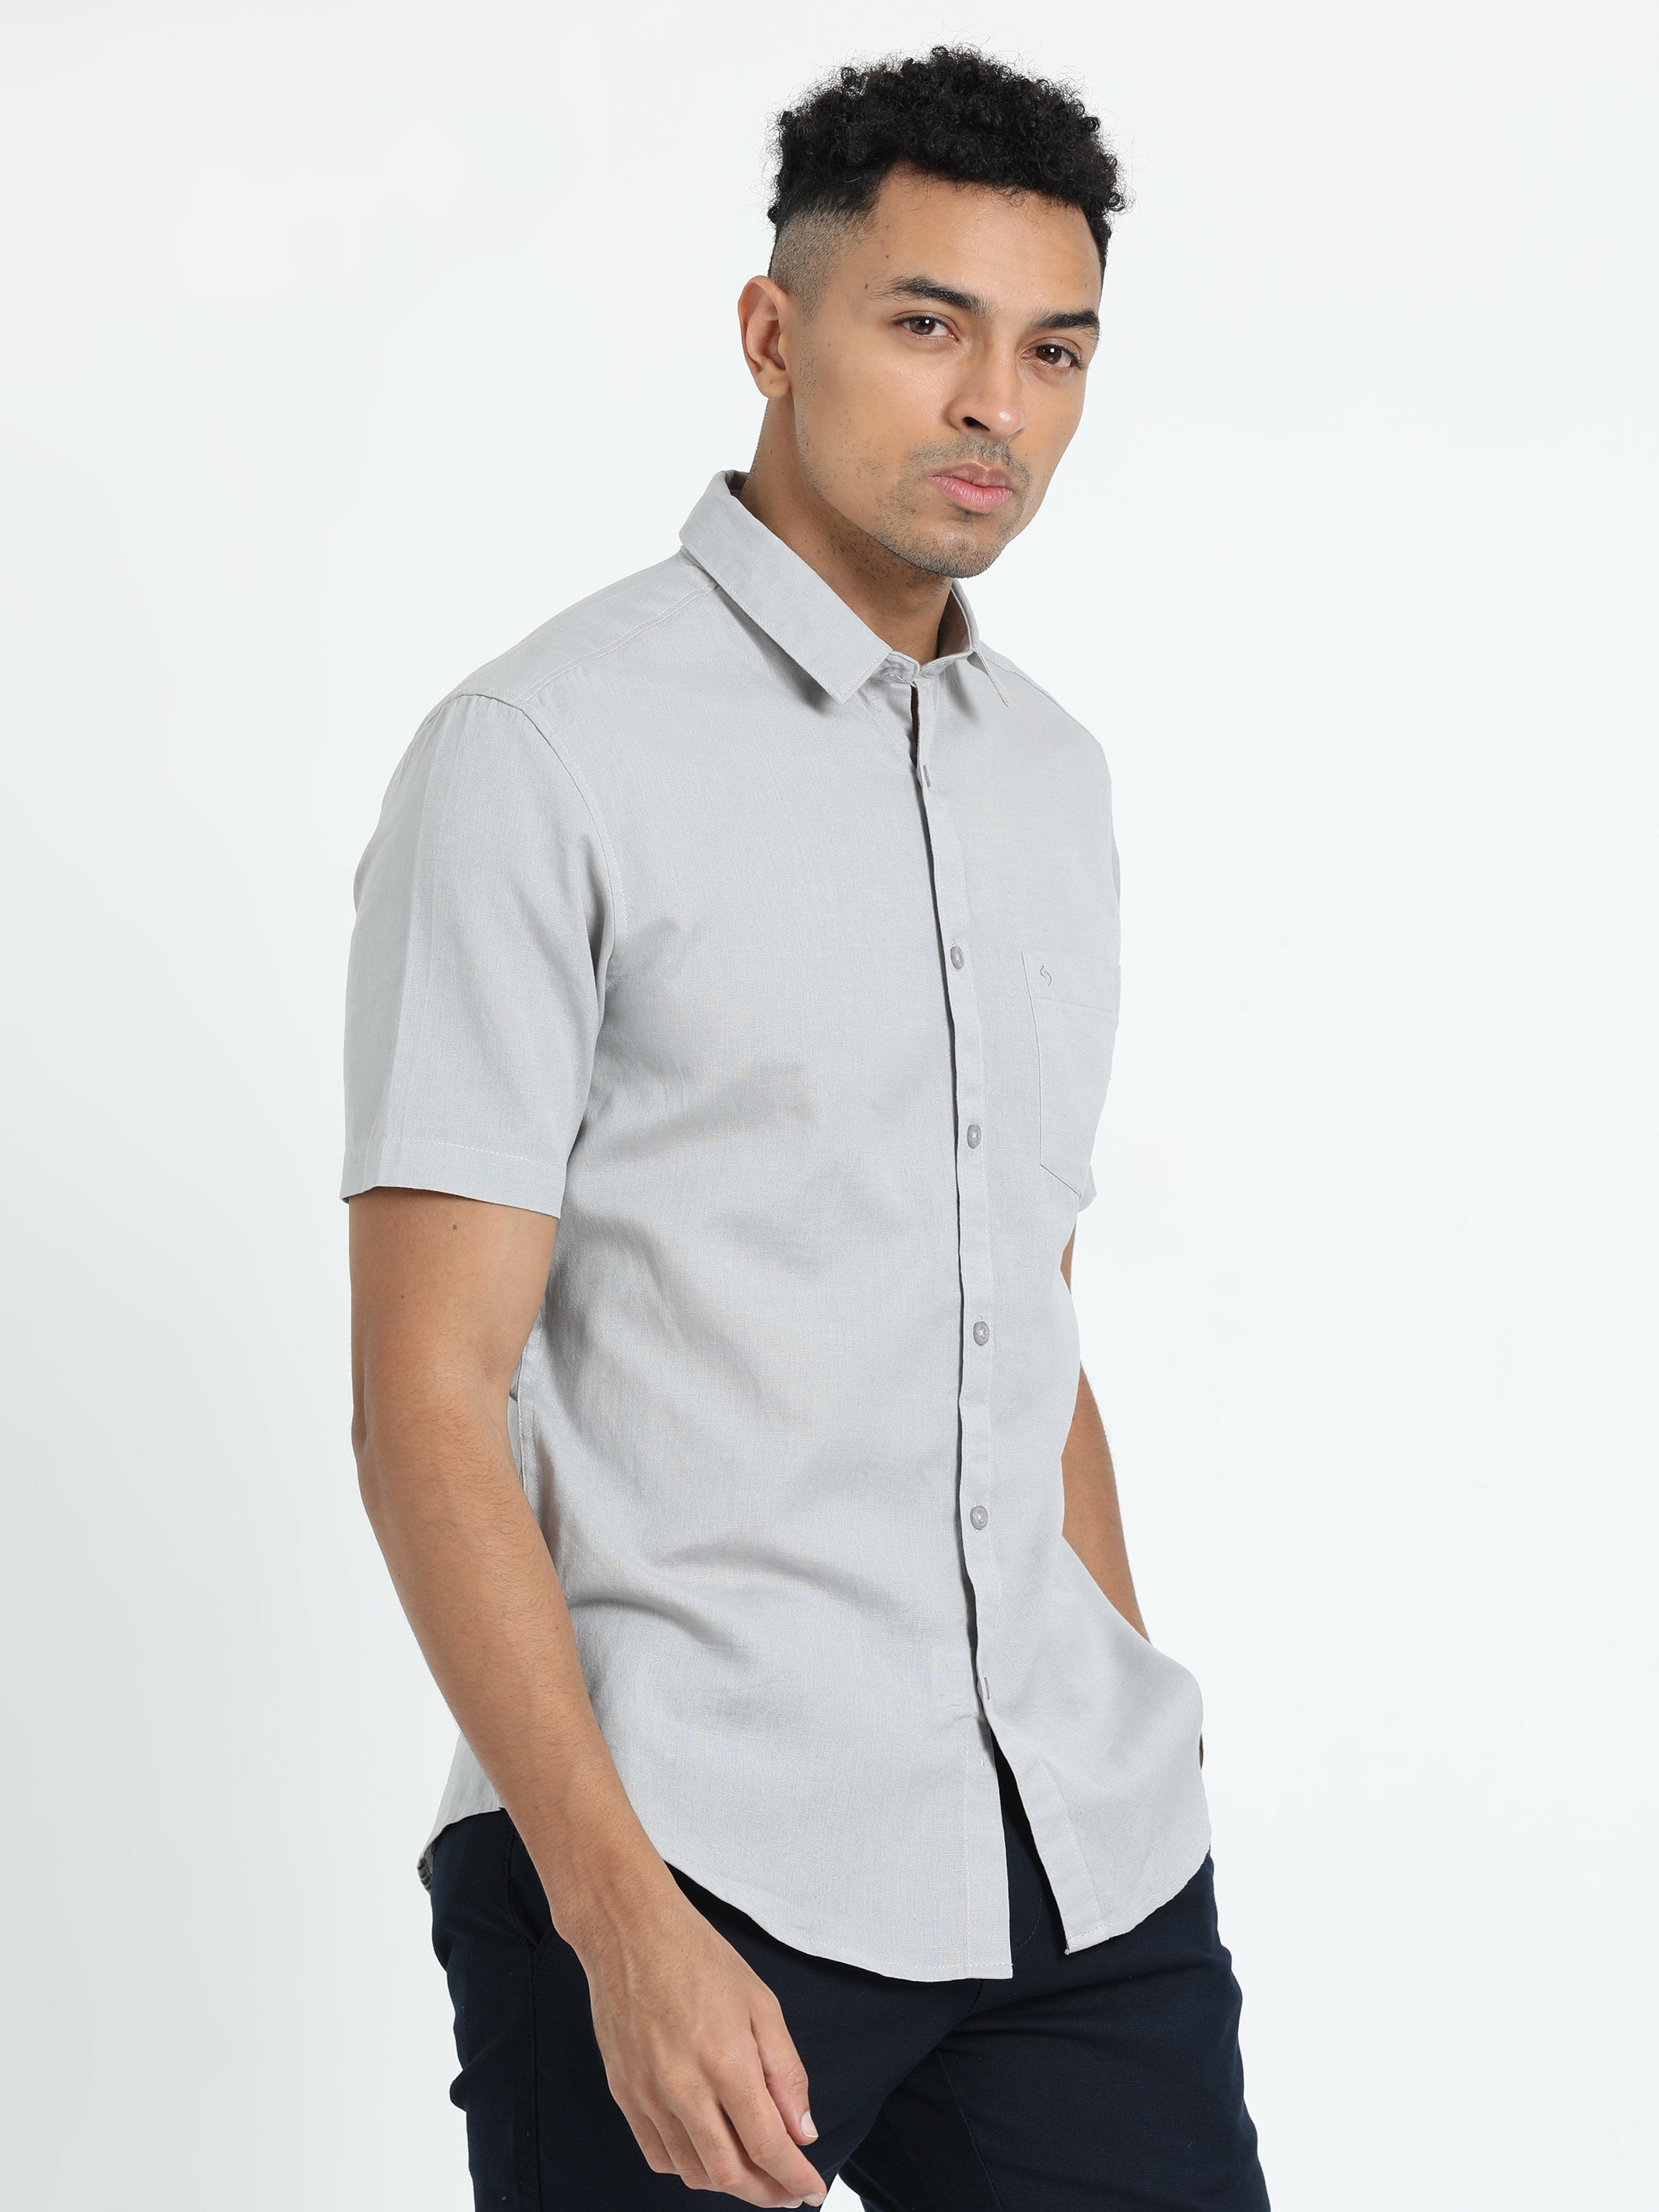 Classic Polo Men's Solid Grey Cotton Linen Half Sleeve Woven Shirt | DAMASK-GREY SF HS